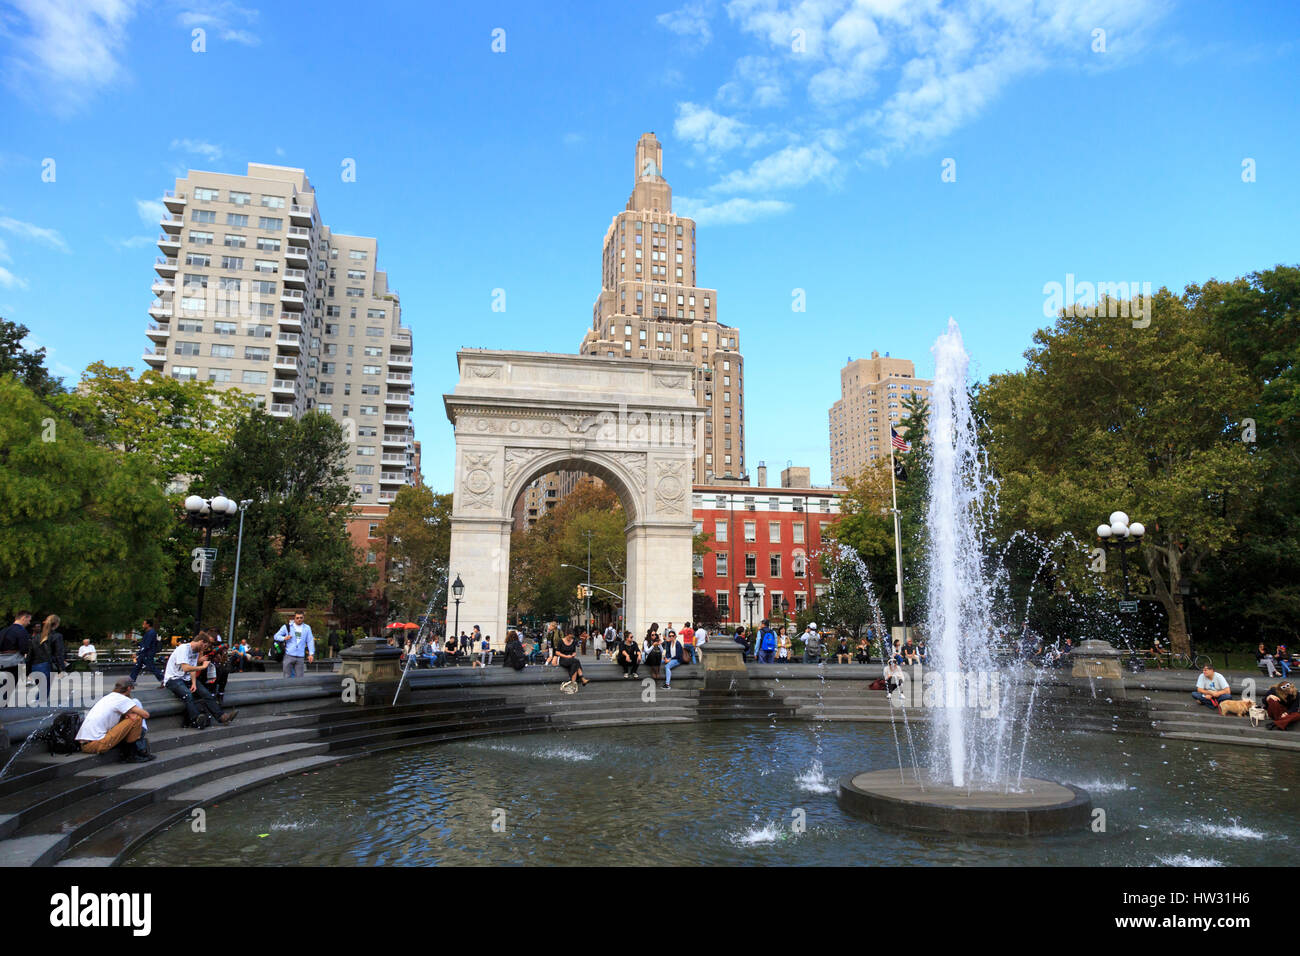 USA, New York, New York, Manhattan, Washington Square Park Banque D'Images